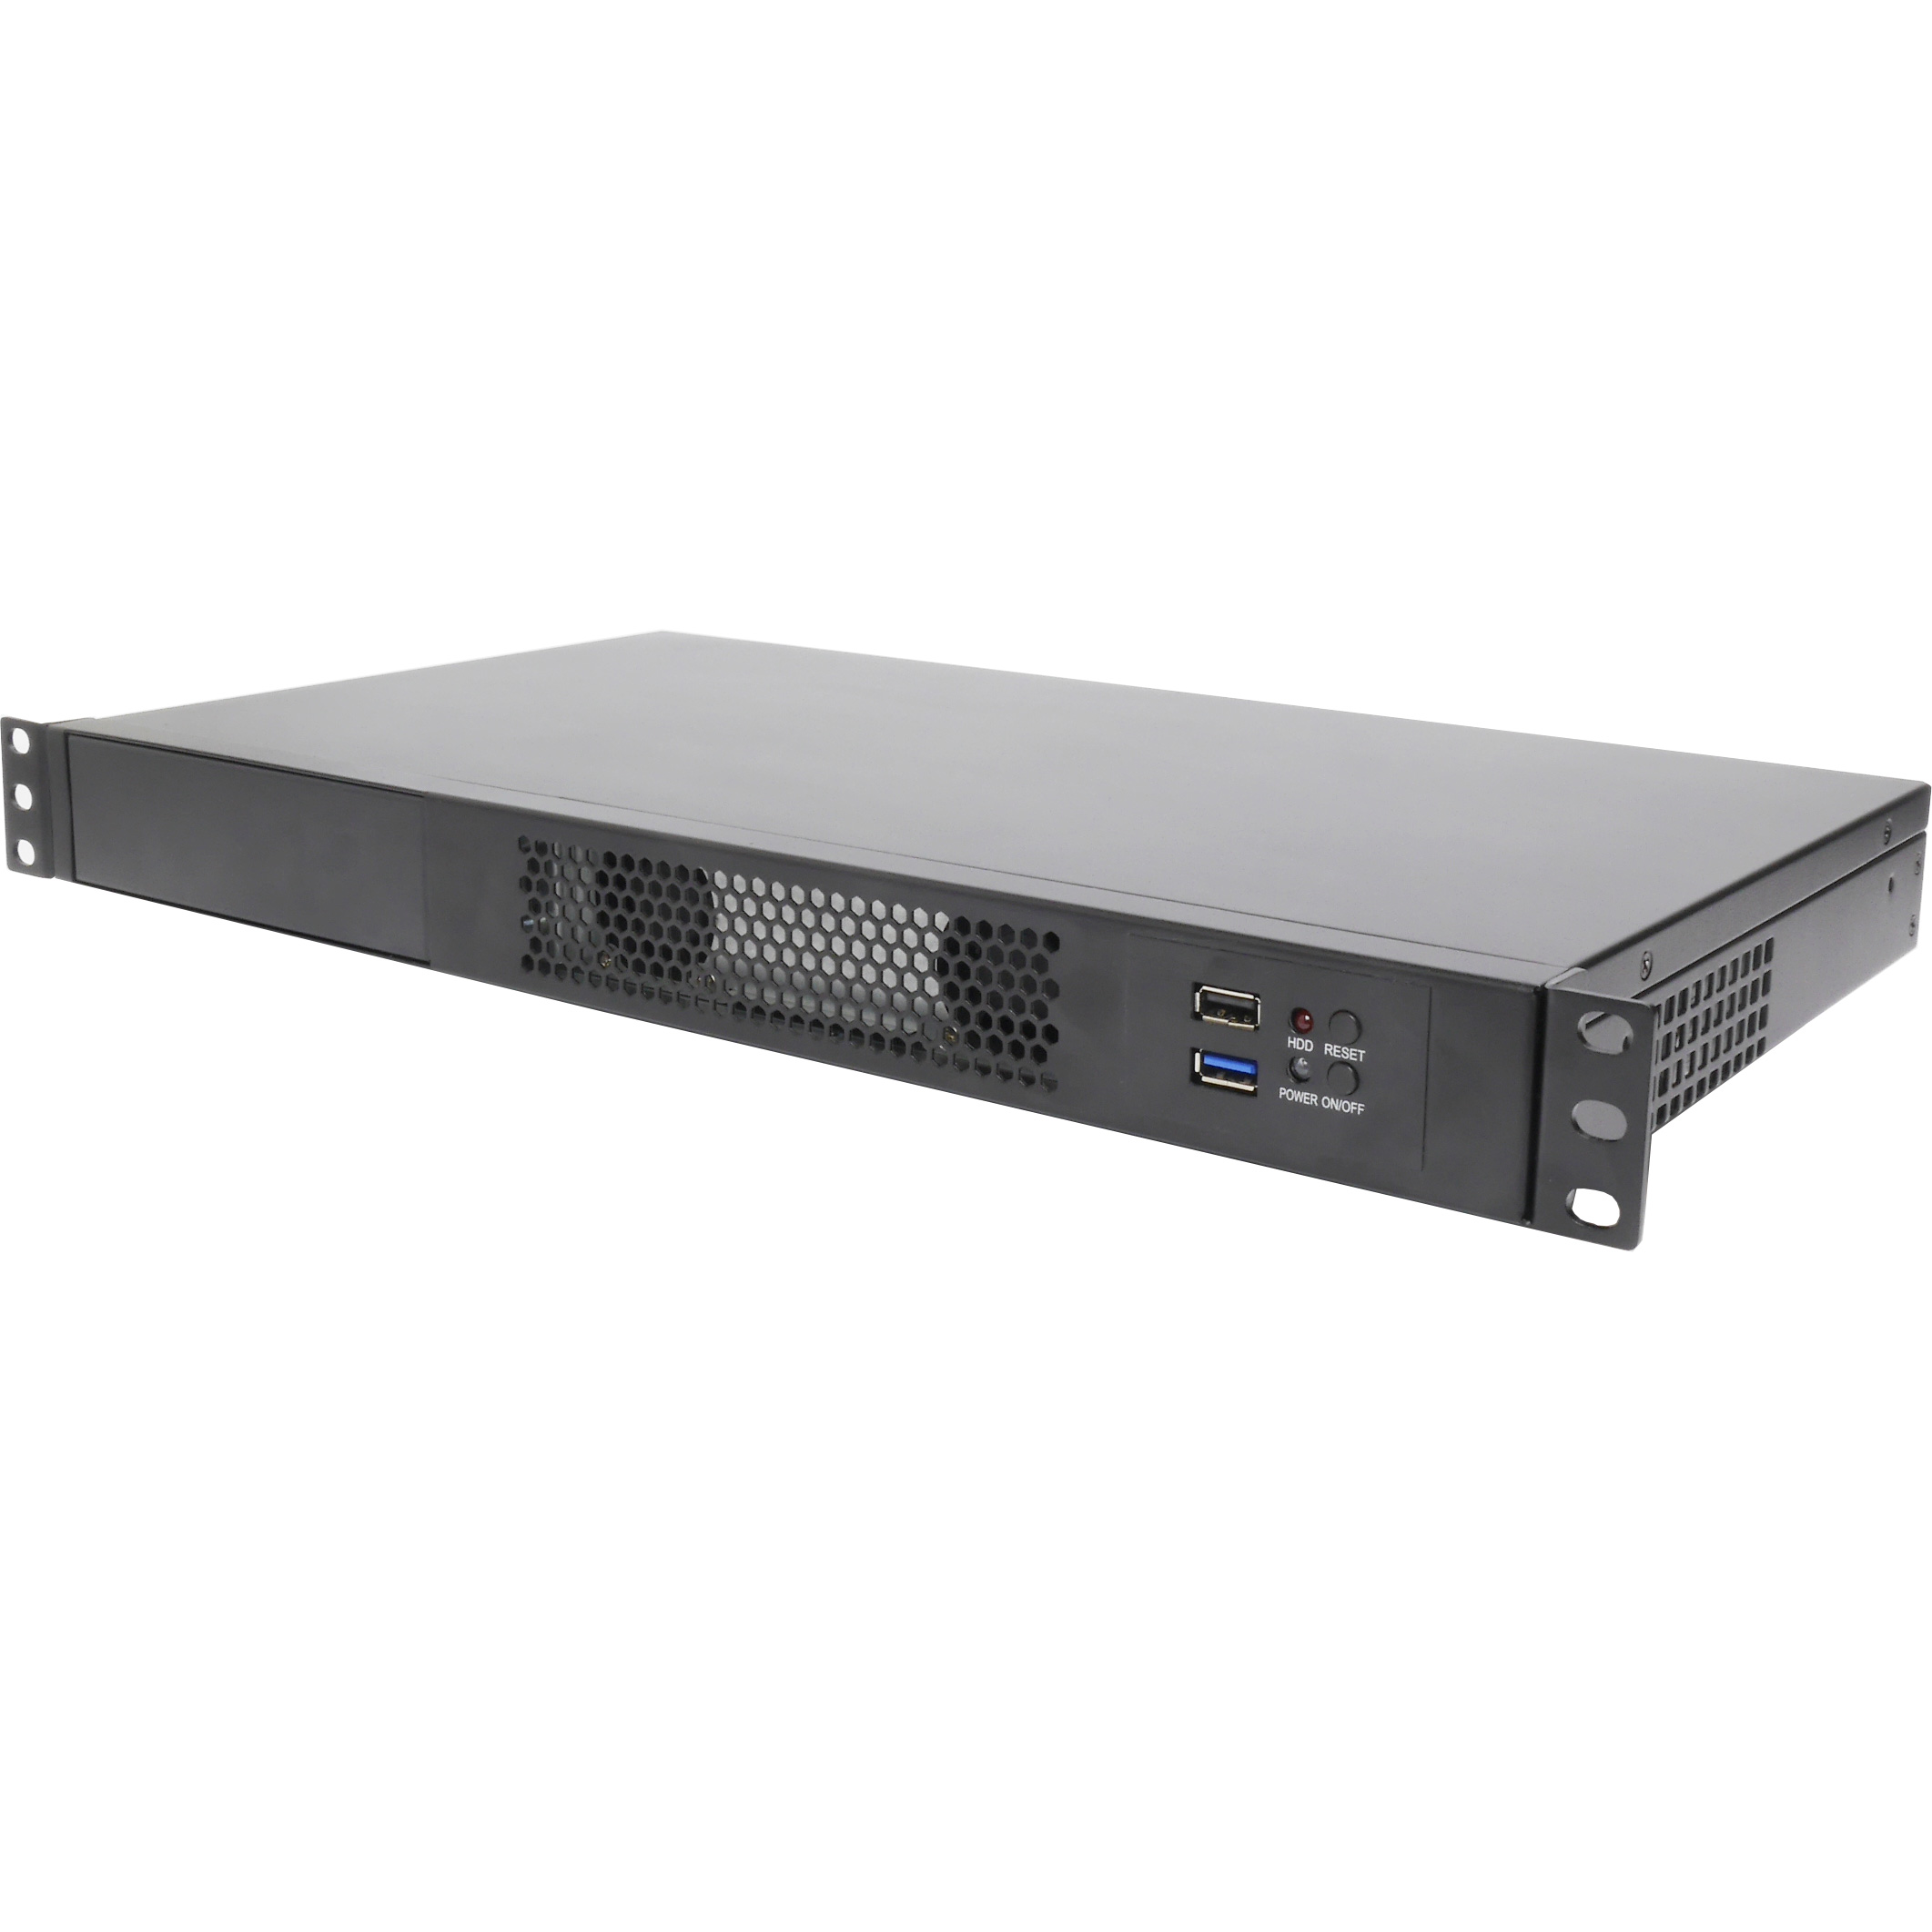 Серверный корпус 1U NR-N125CD 300Вт(MiniITX, 1x5.25 or 1x3.5int or 2x2.5int, 250mm) черный, NegoRack